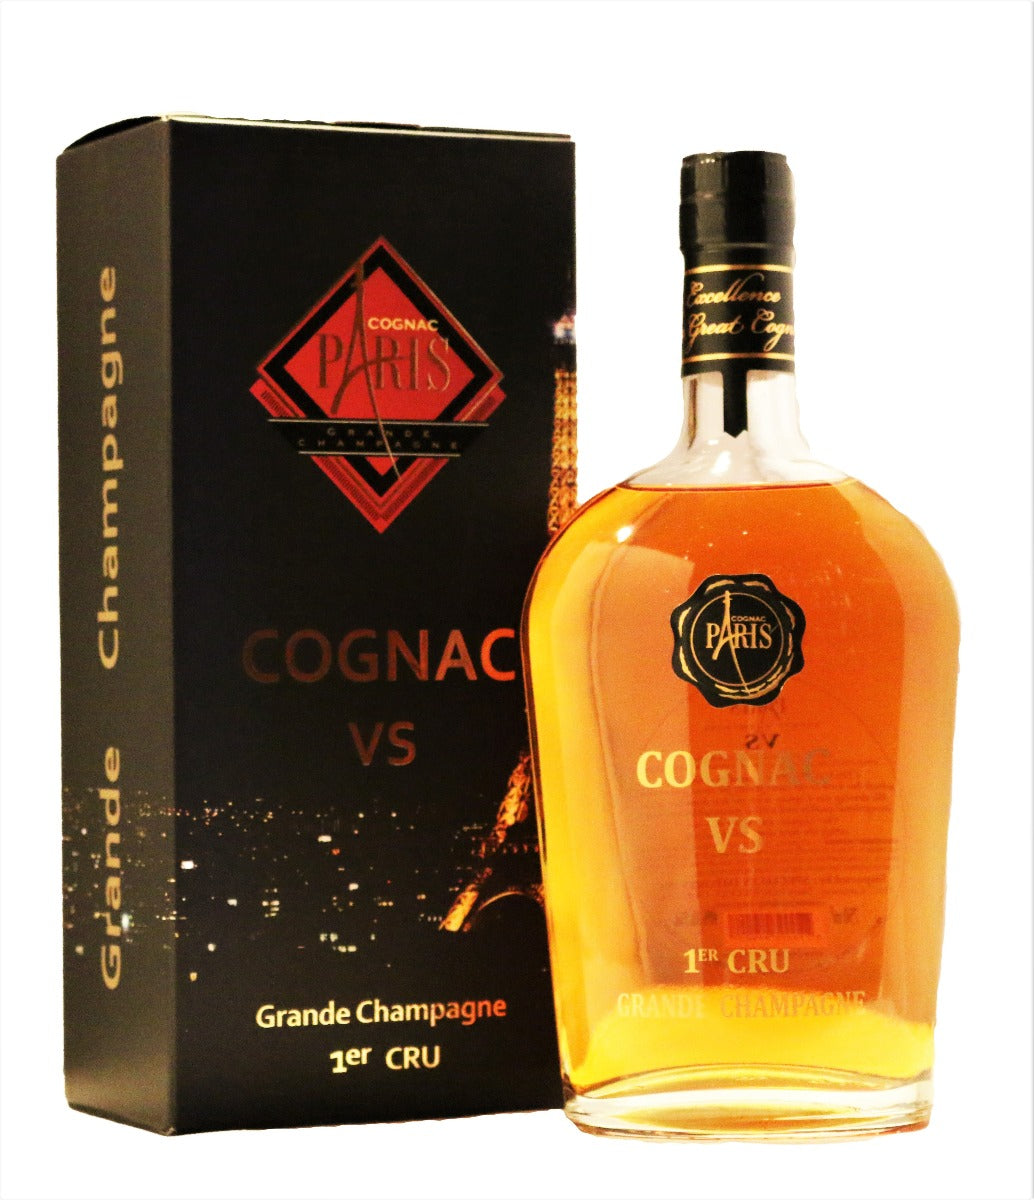 PARIS COGNAC VS GRANDE CHAMPAGNE FRANCE 750ML - Remedy Liquor